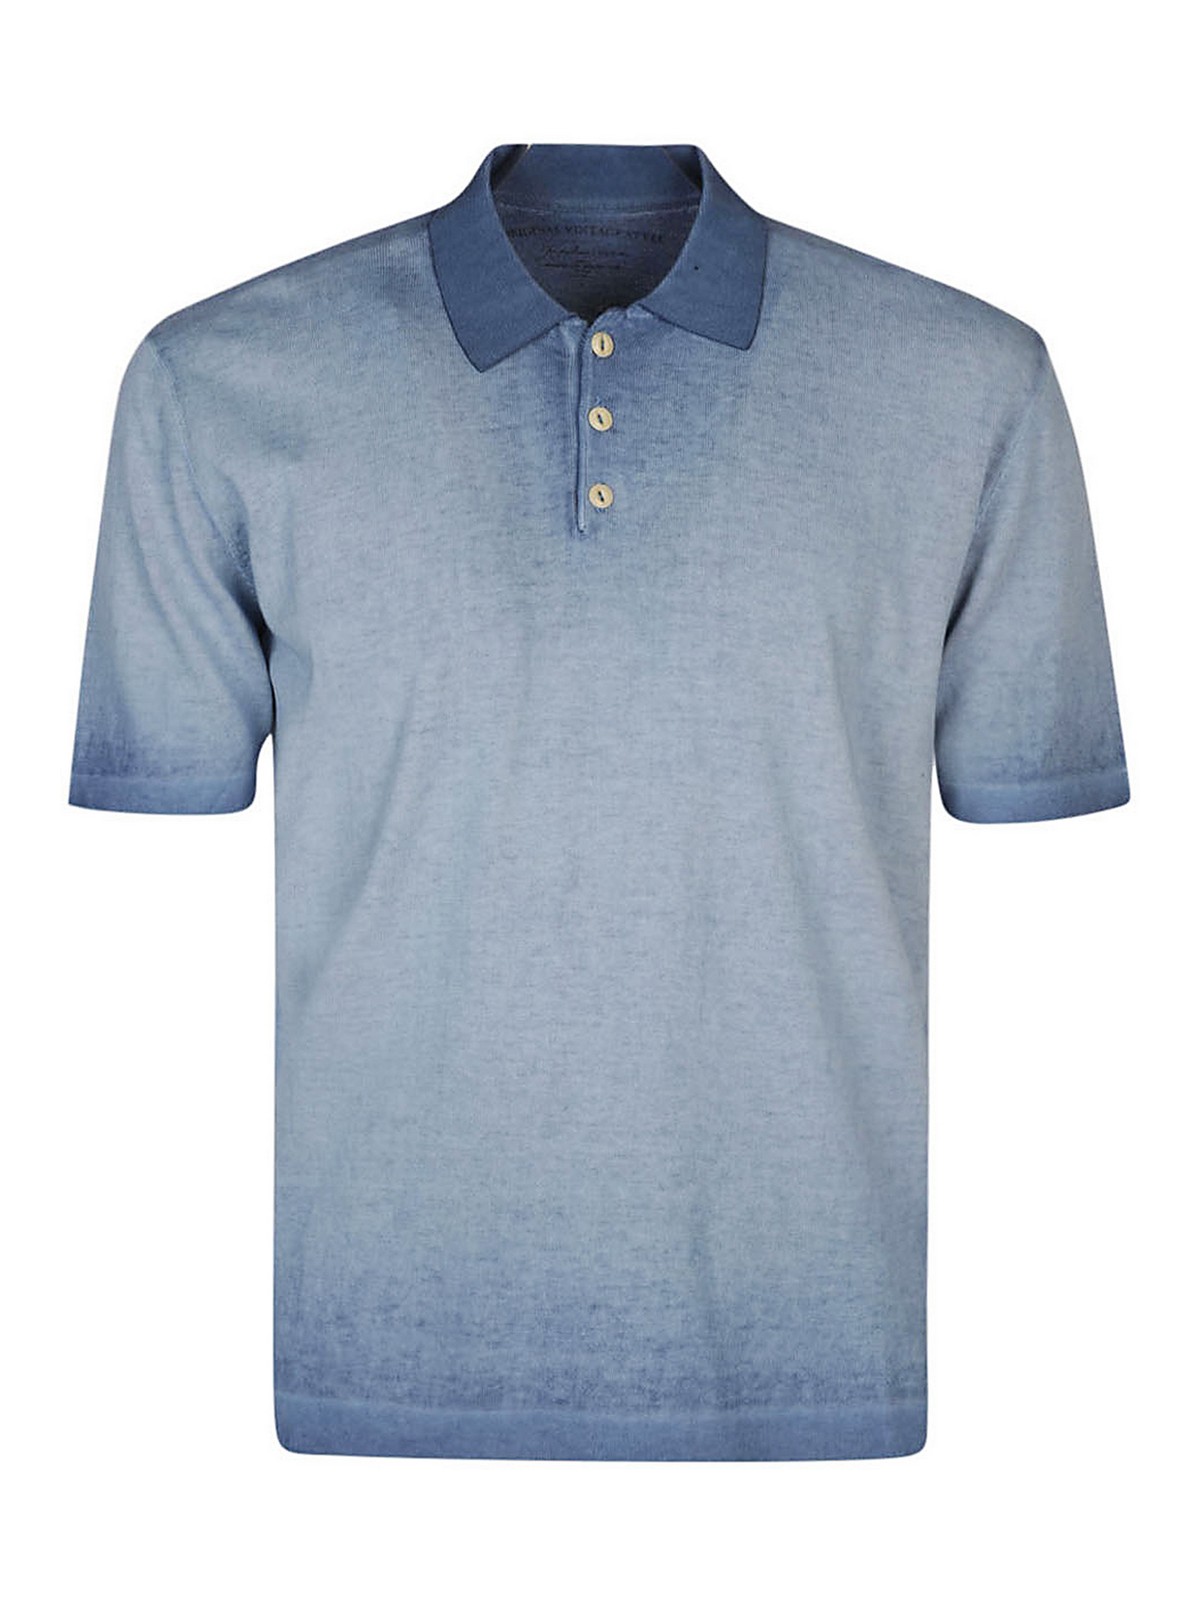 Original Vintage Style Cotton Polo Shirt In Blue